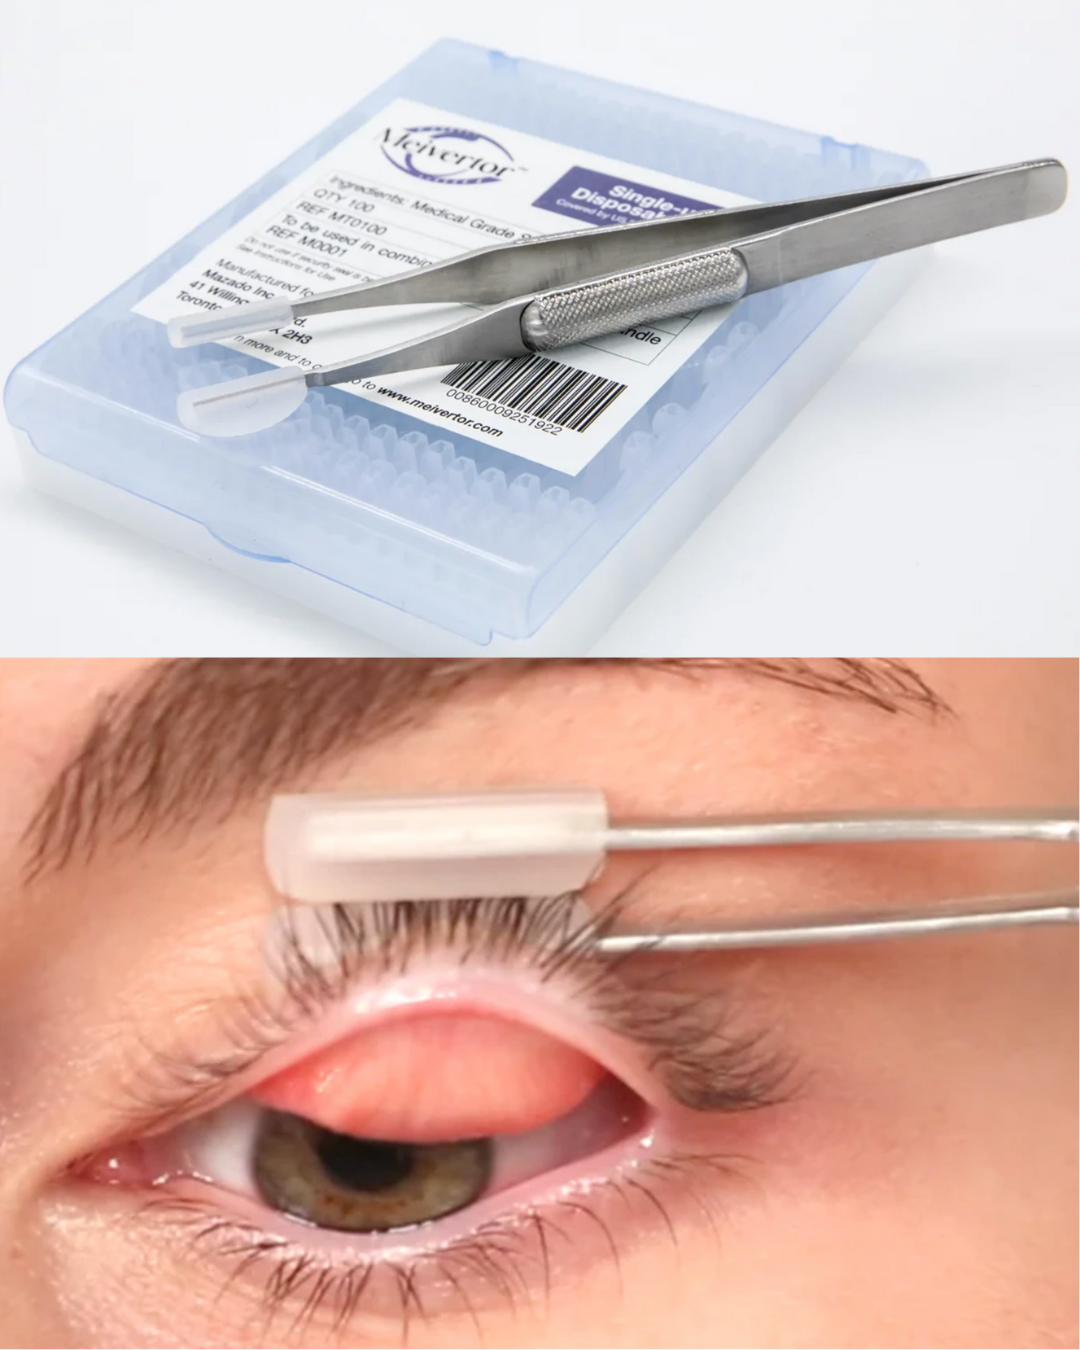 New Meivertor eyelid eversion tool.